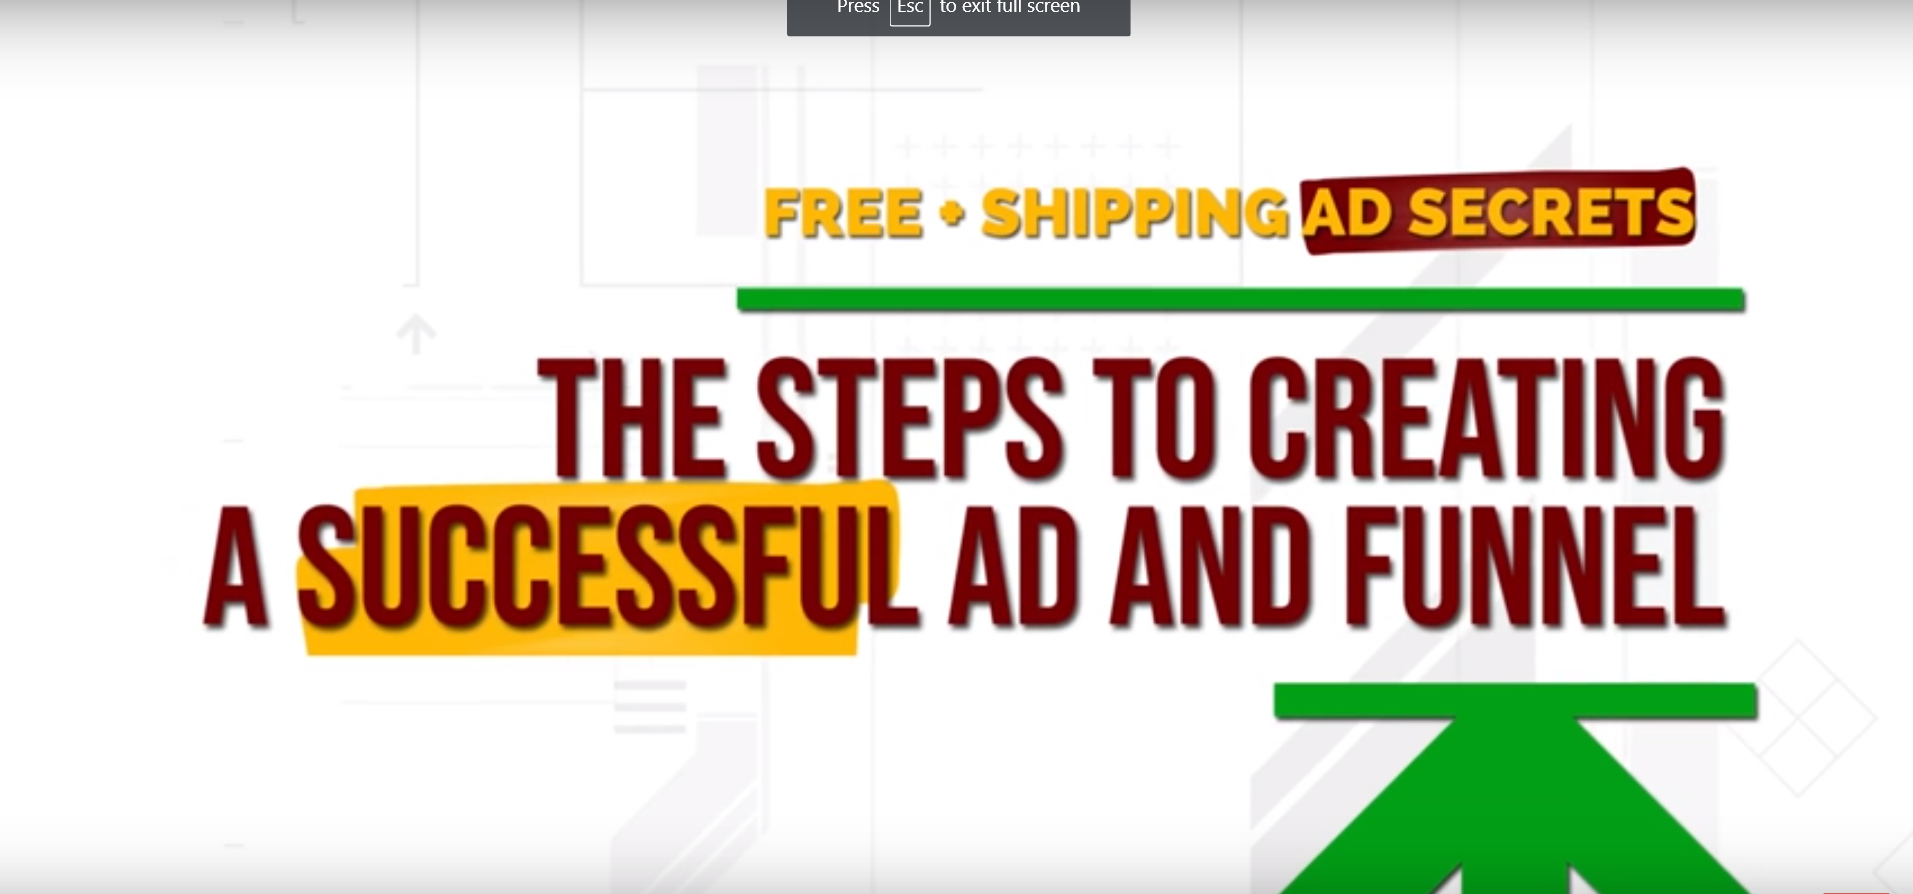 Free + Shipping ad secrets